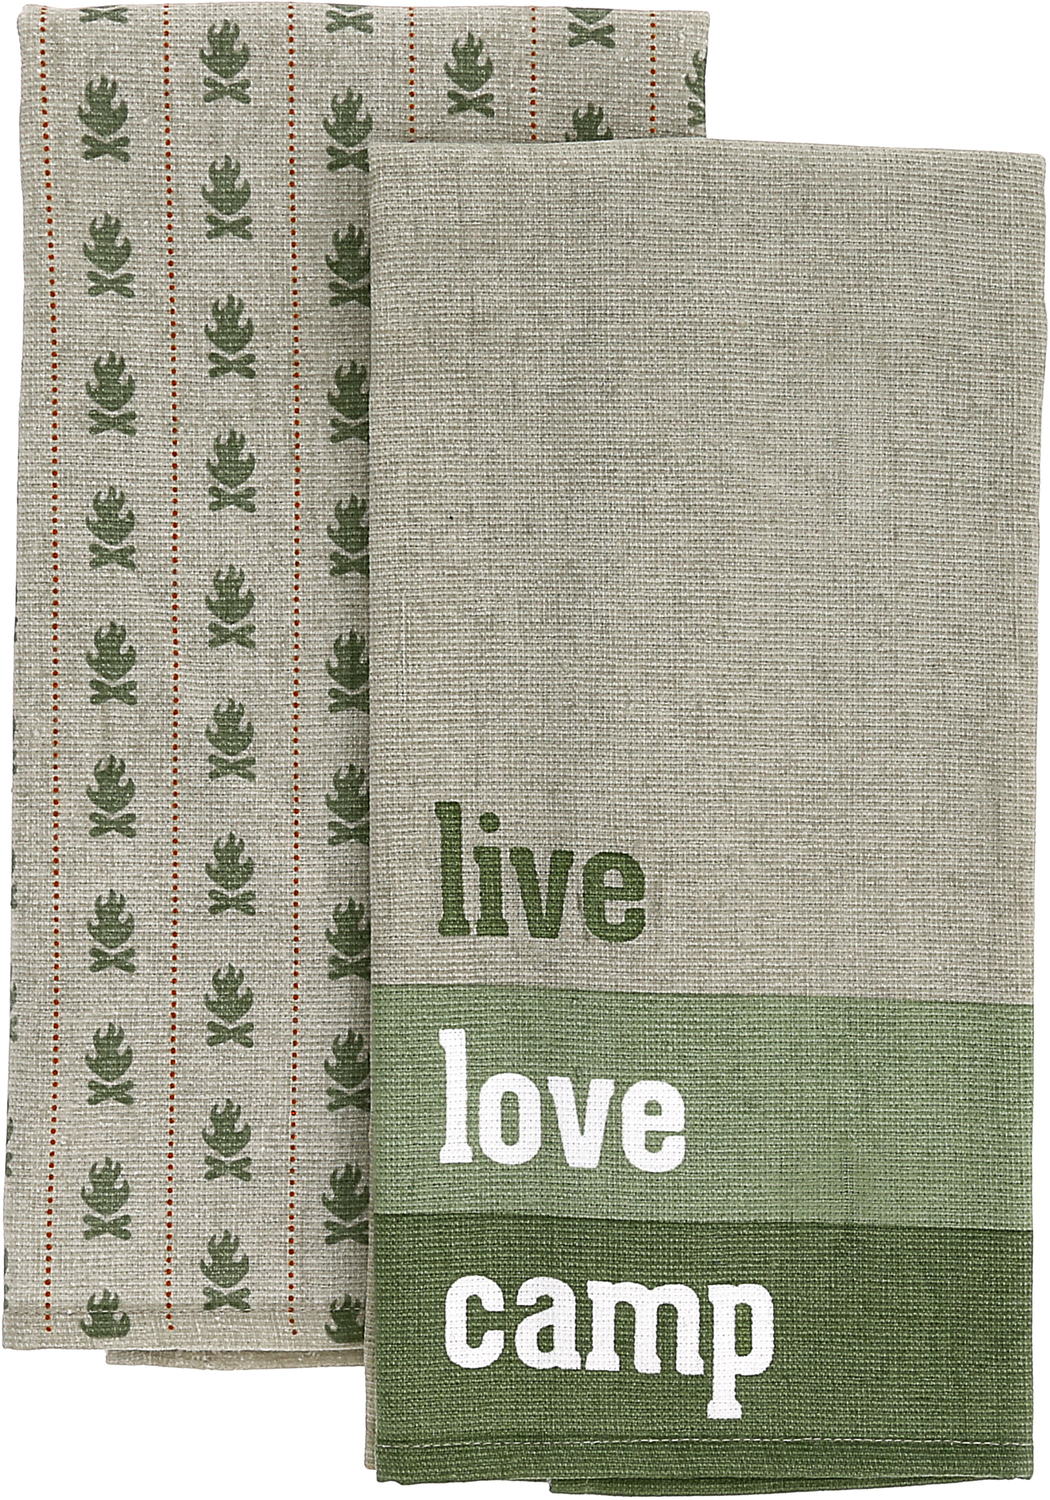 Live Love Camp by We People - Live Love Camp - Tea Towel Gift Set
(2 - 20" x 28")